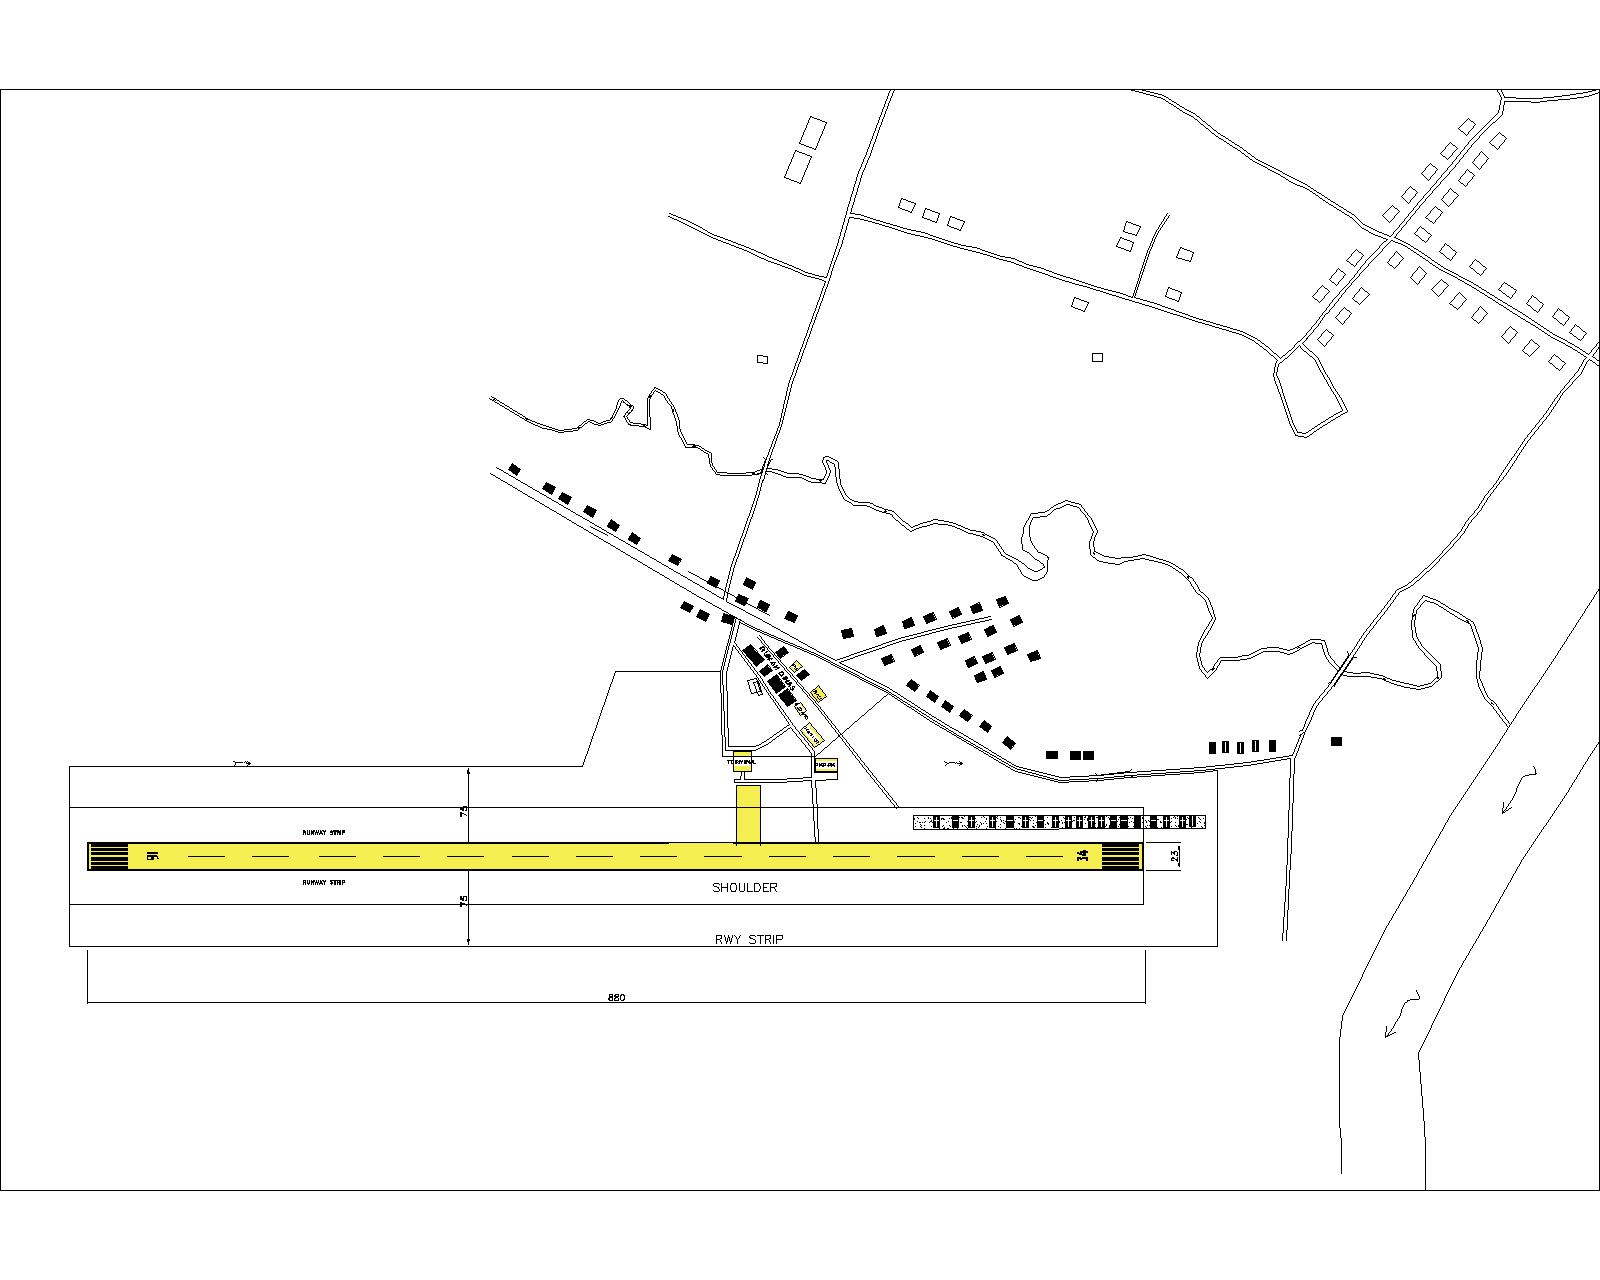 Gambar Peta Bandara Lay Out Bandara